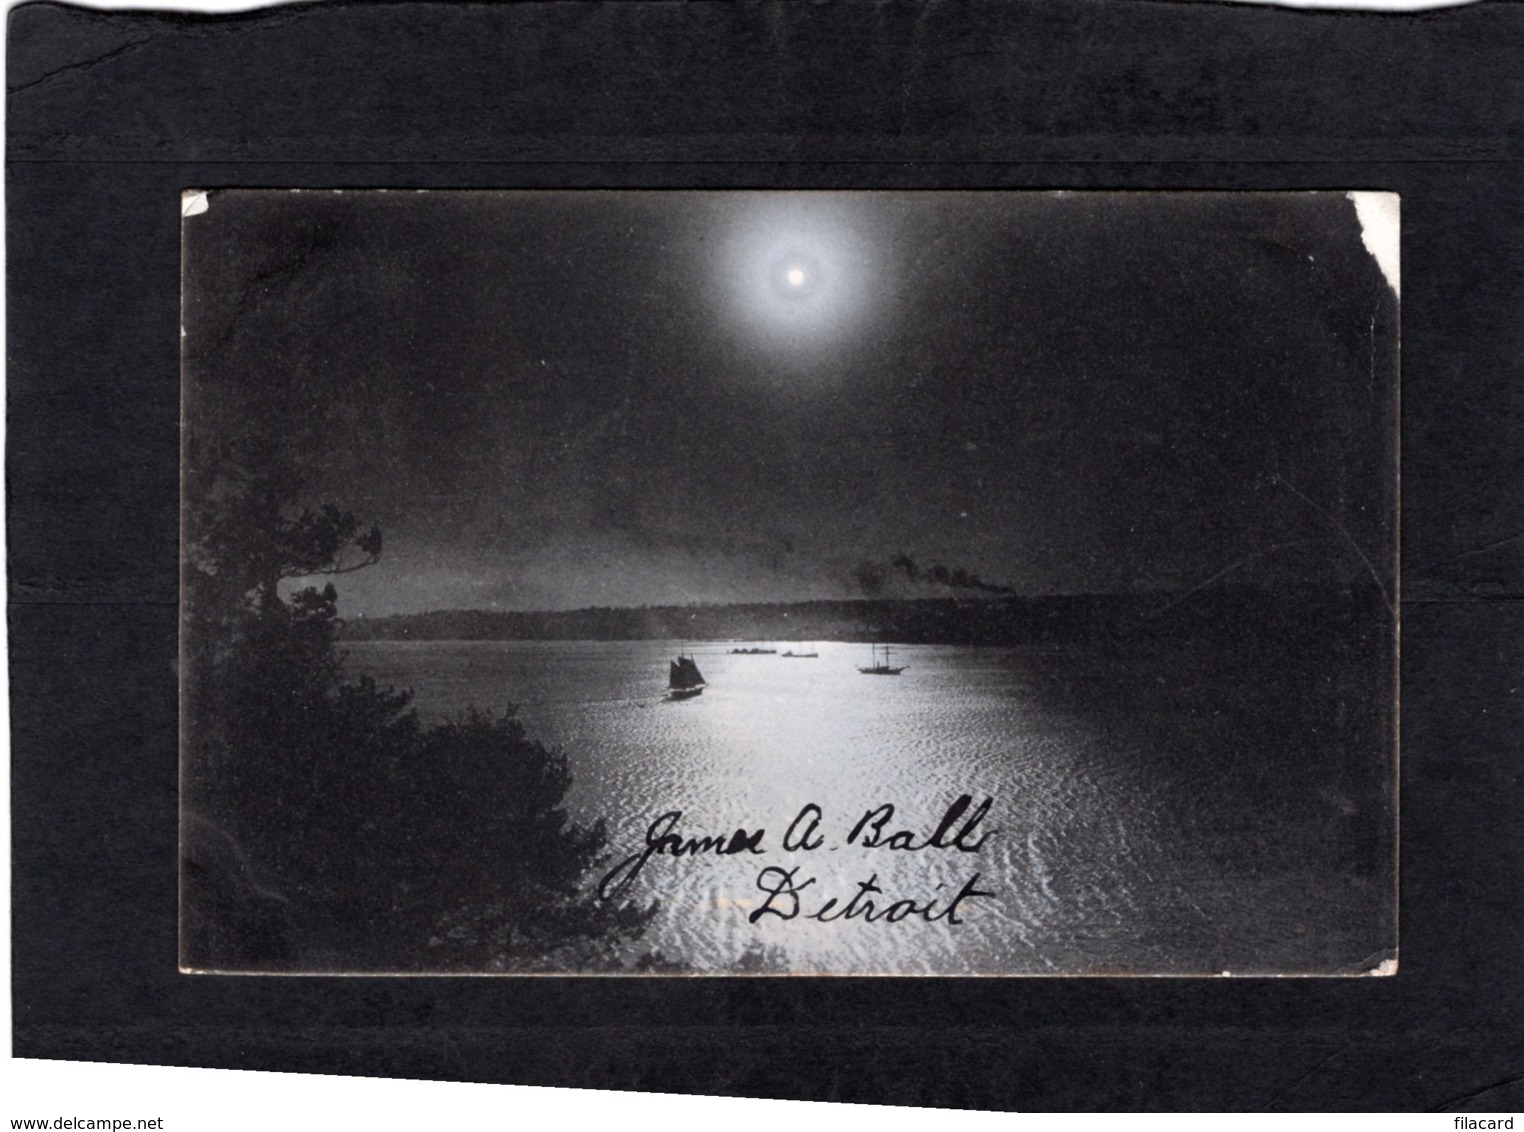 92331   Stati  Uniti,  Moonlight On The Hudson,  N. Y.,  City,  VG - Hudson River